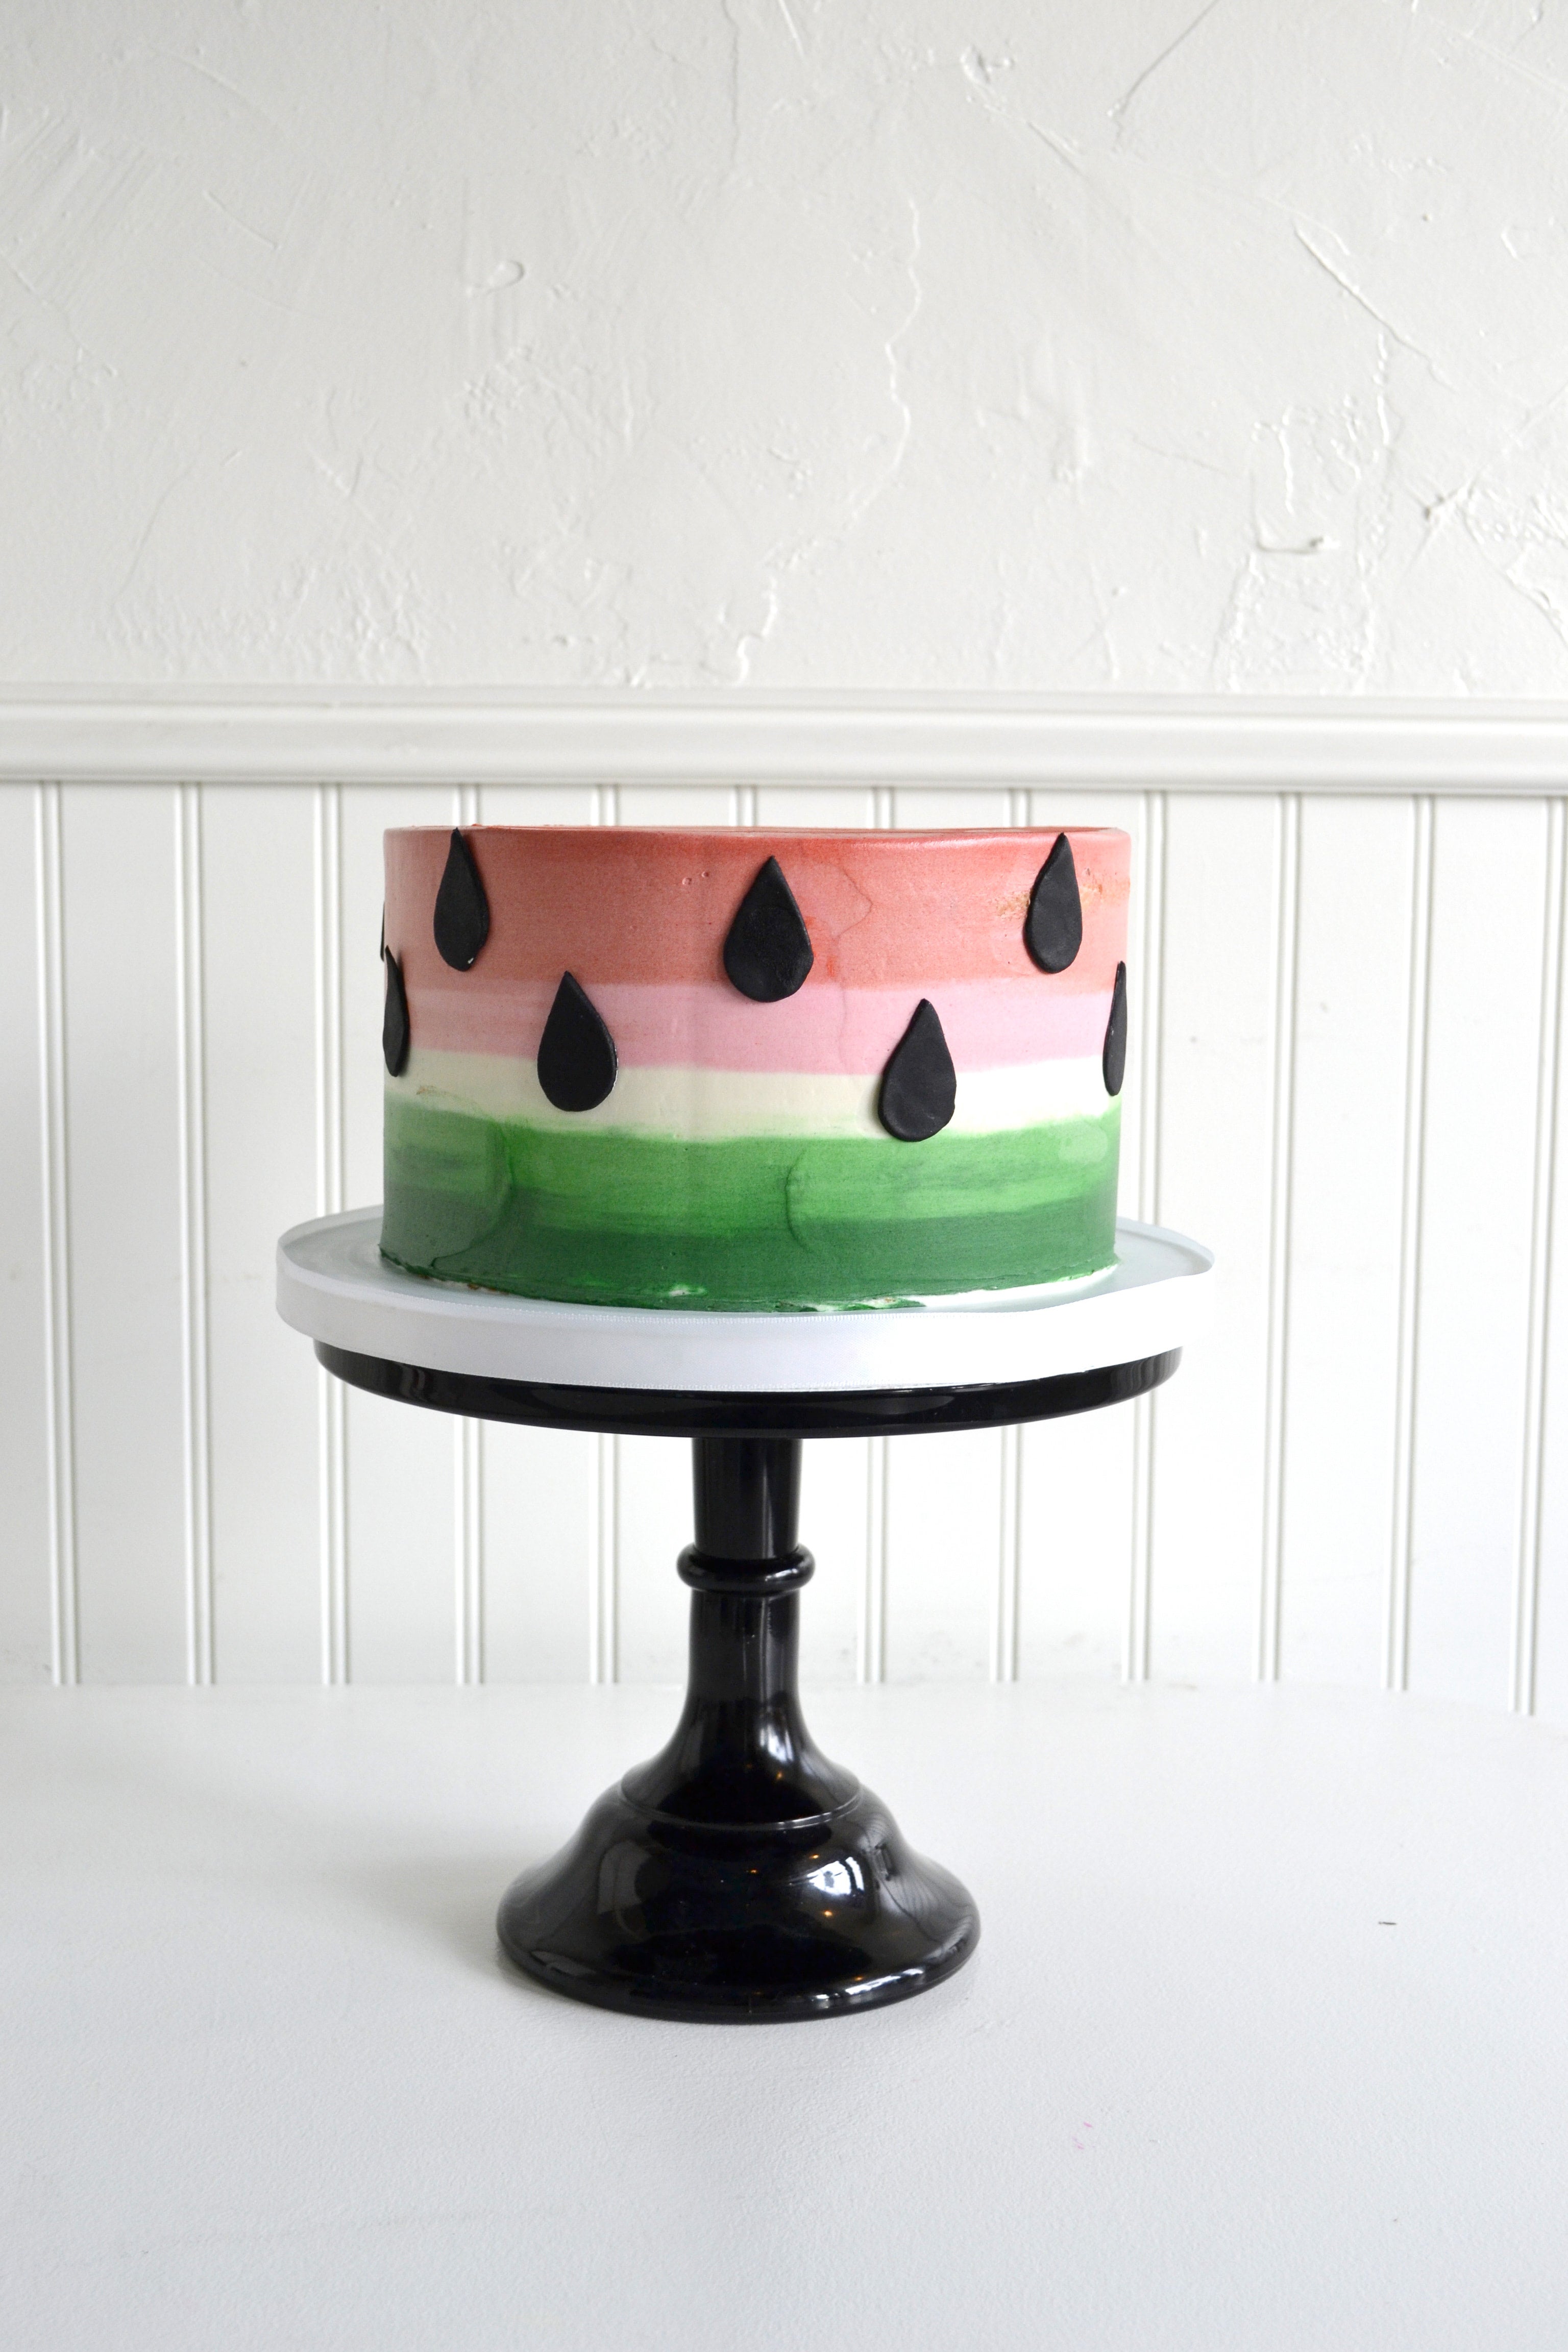 Made this super cute watermelon cake this weekend! : r/Baking